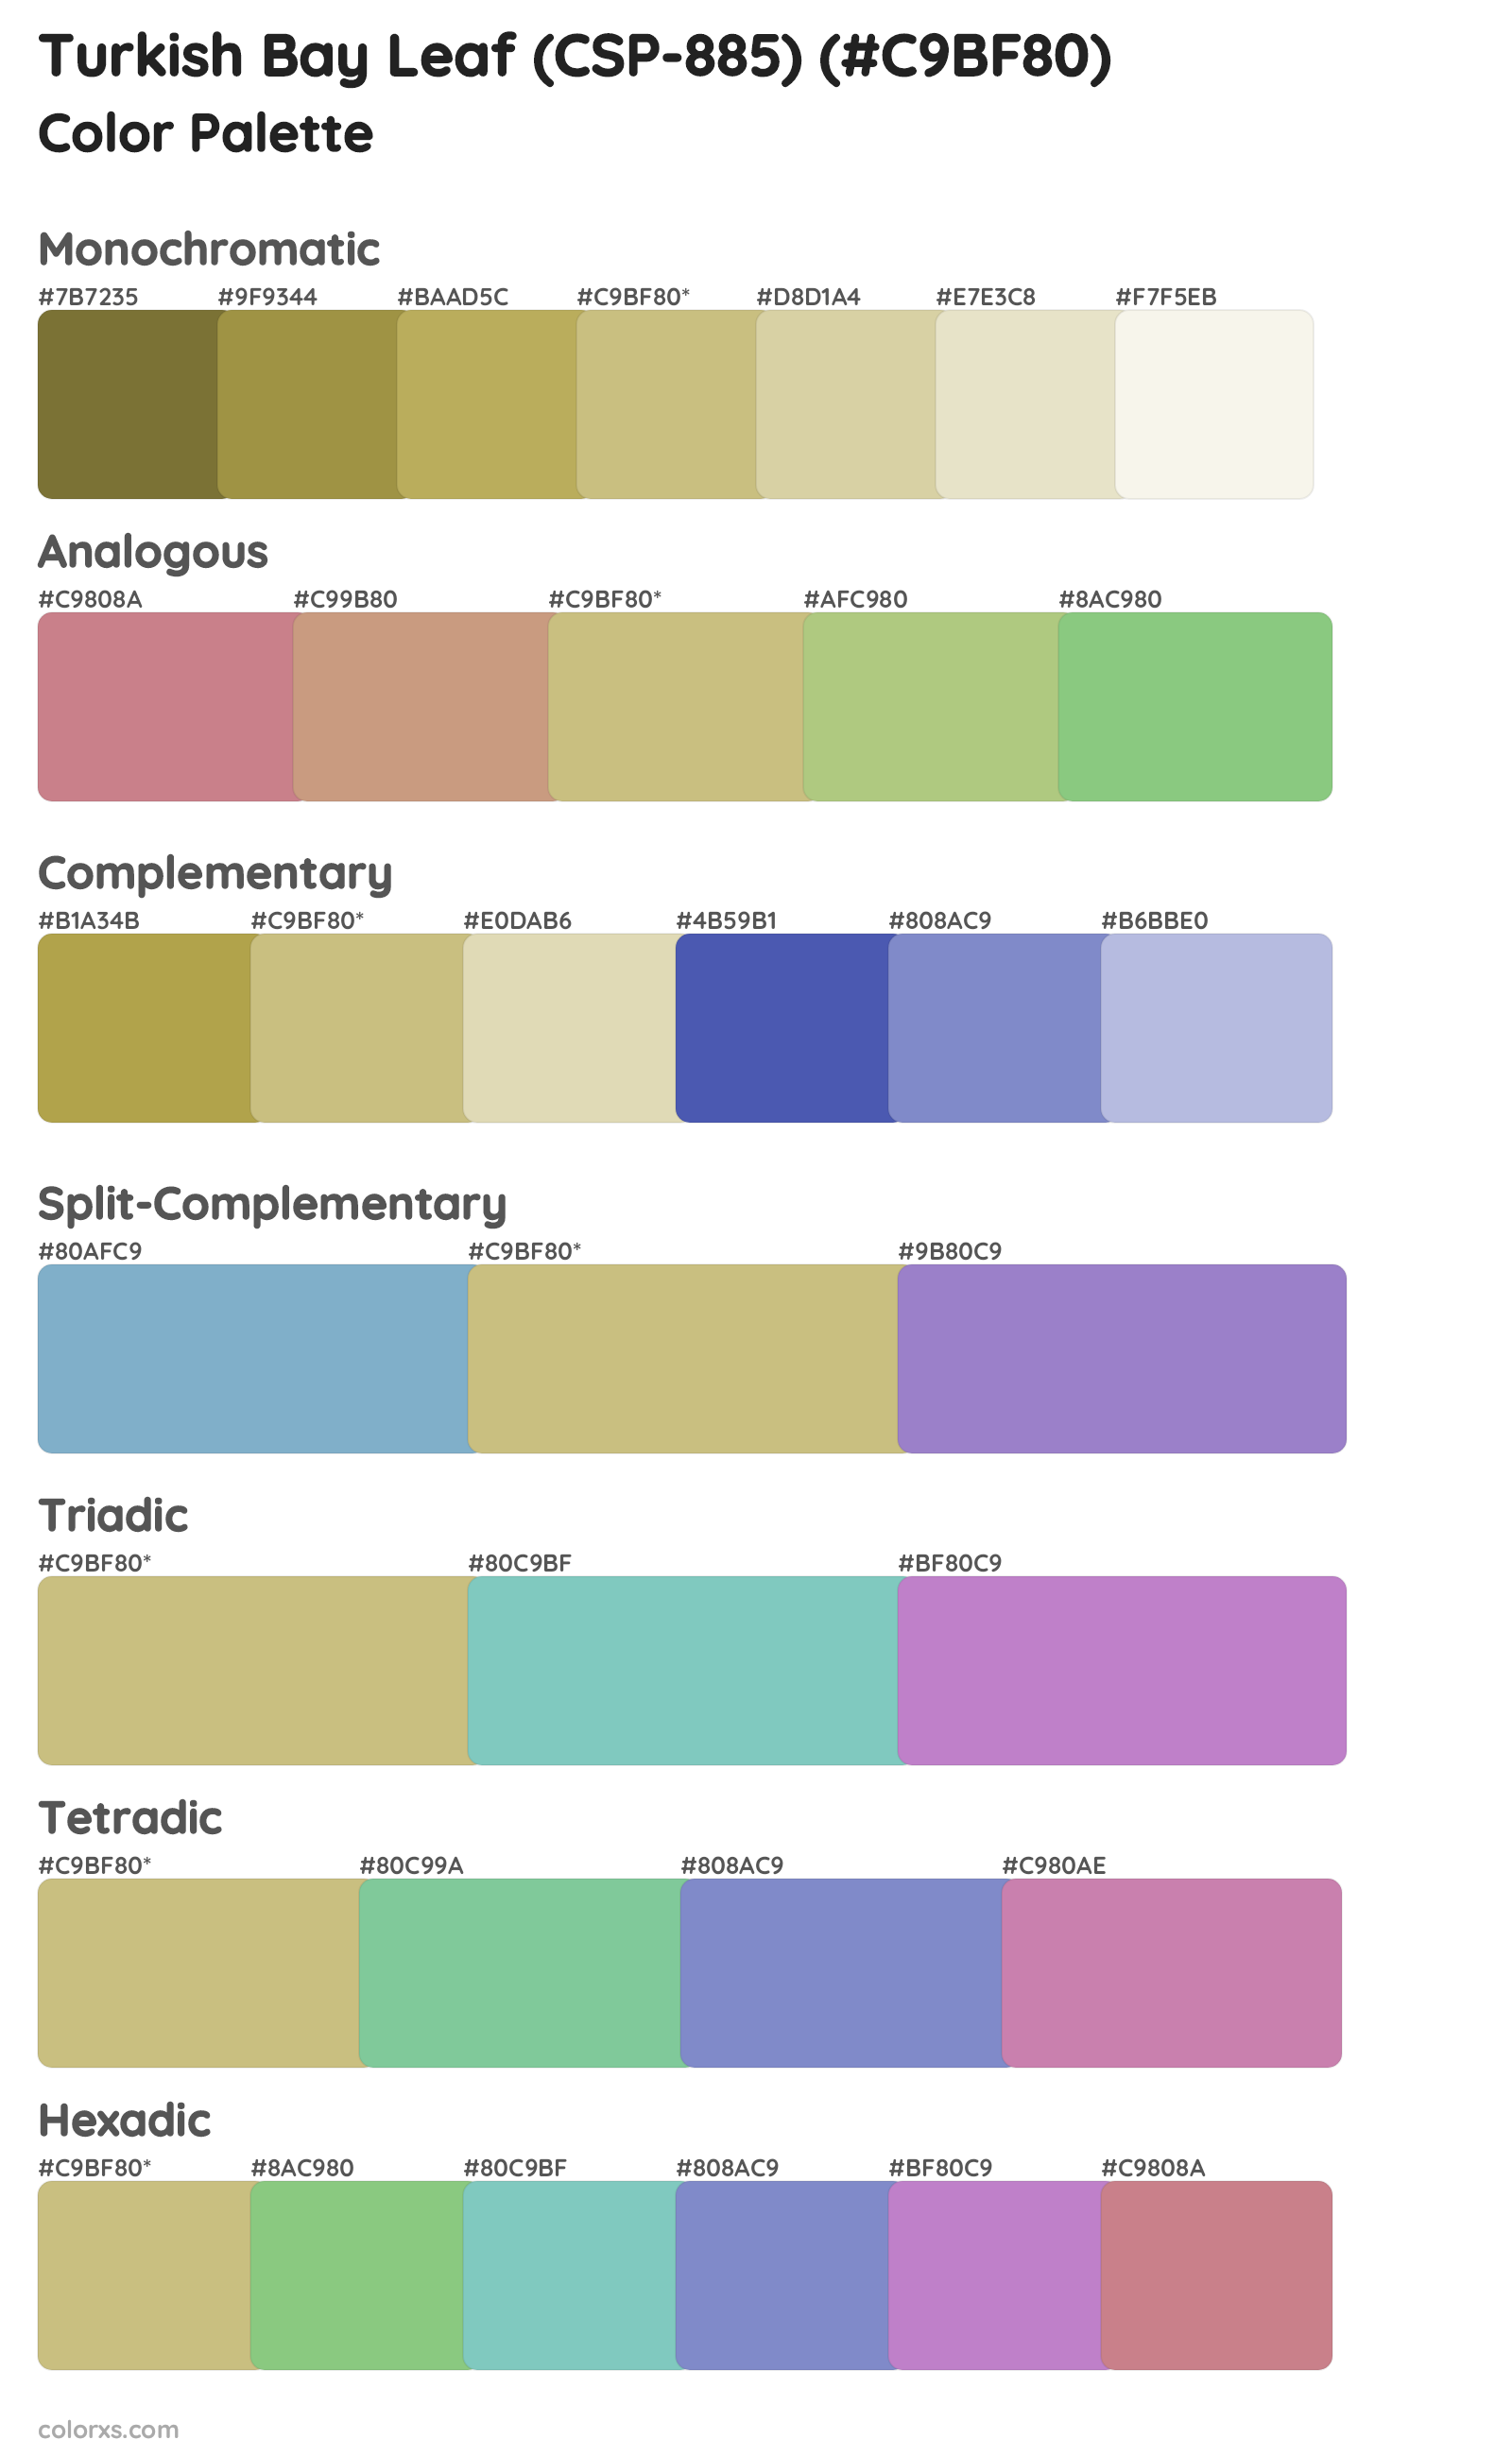 Turkish Bay Leaf (CSP-885) Color Scheme Palettes